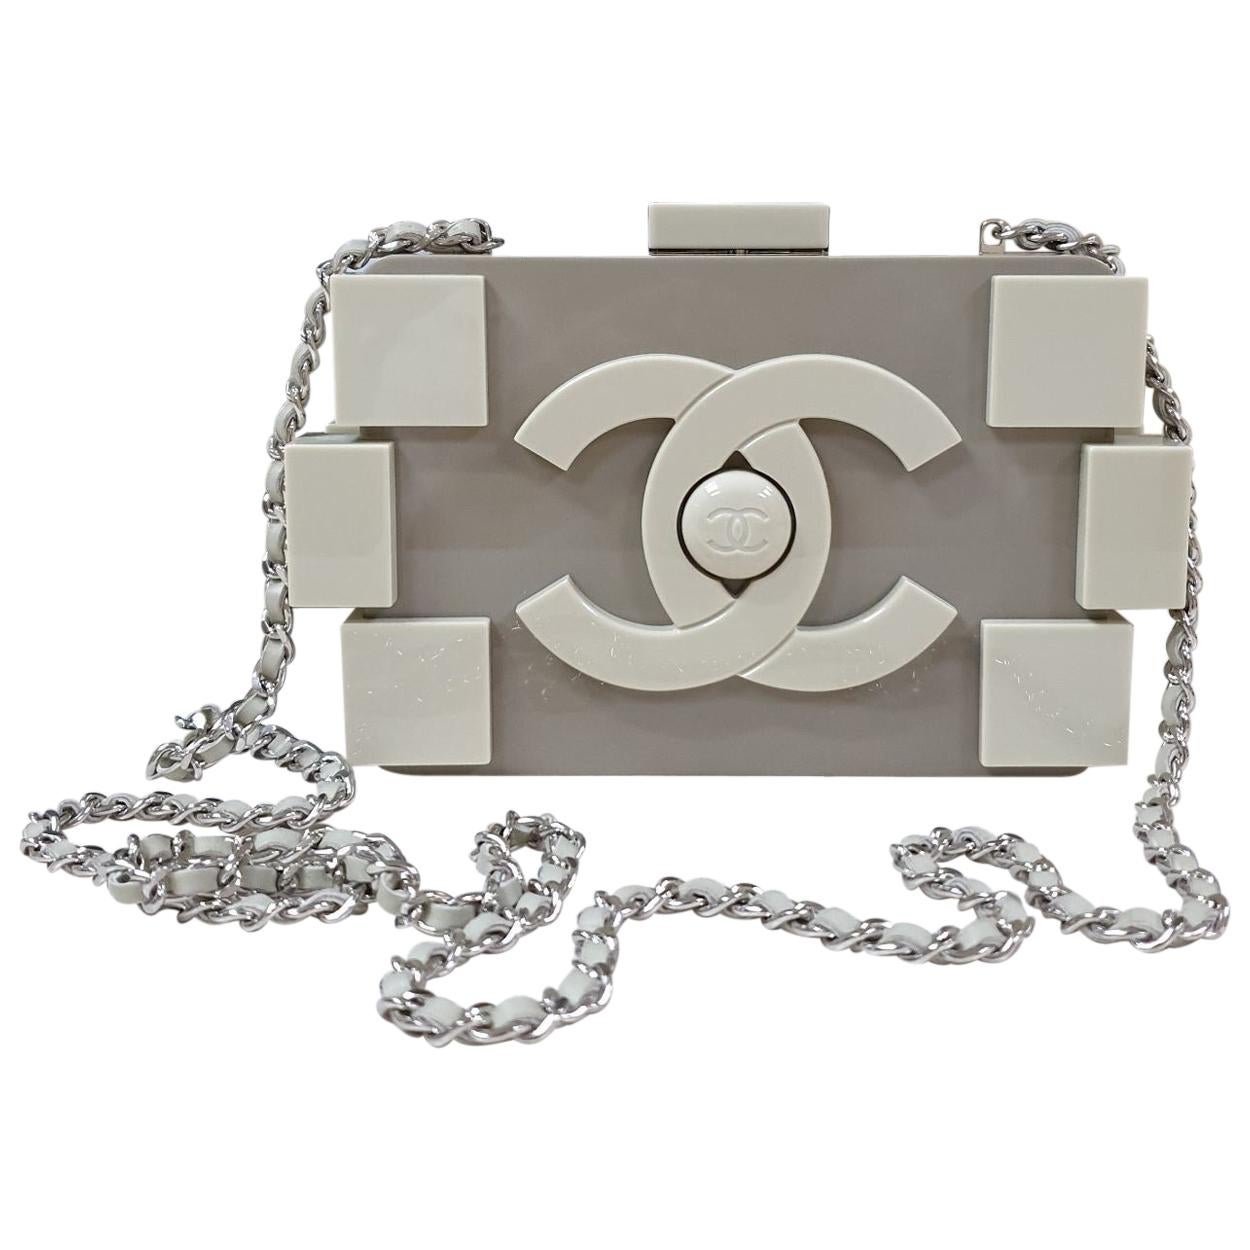 CHANEL BAGS REPLICA: 2013 Chanel Lego Clutch Bag